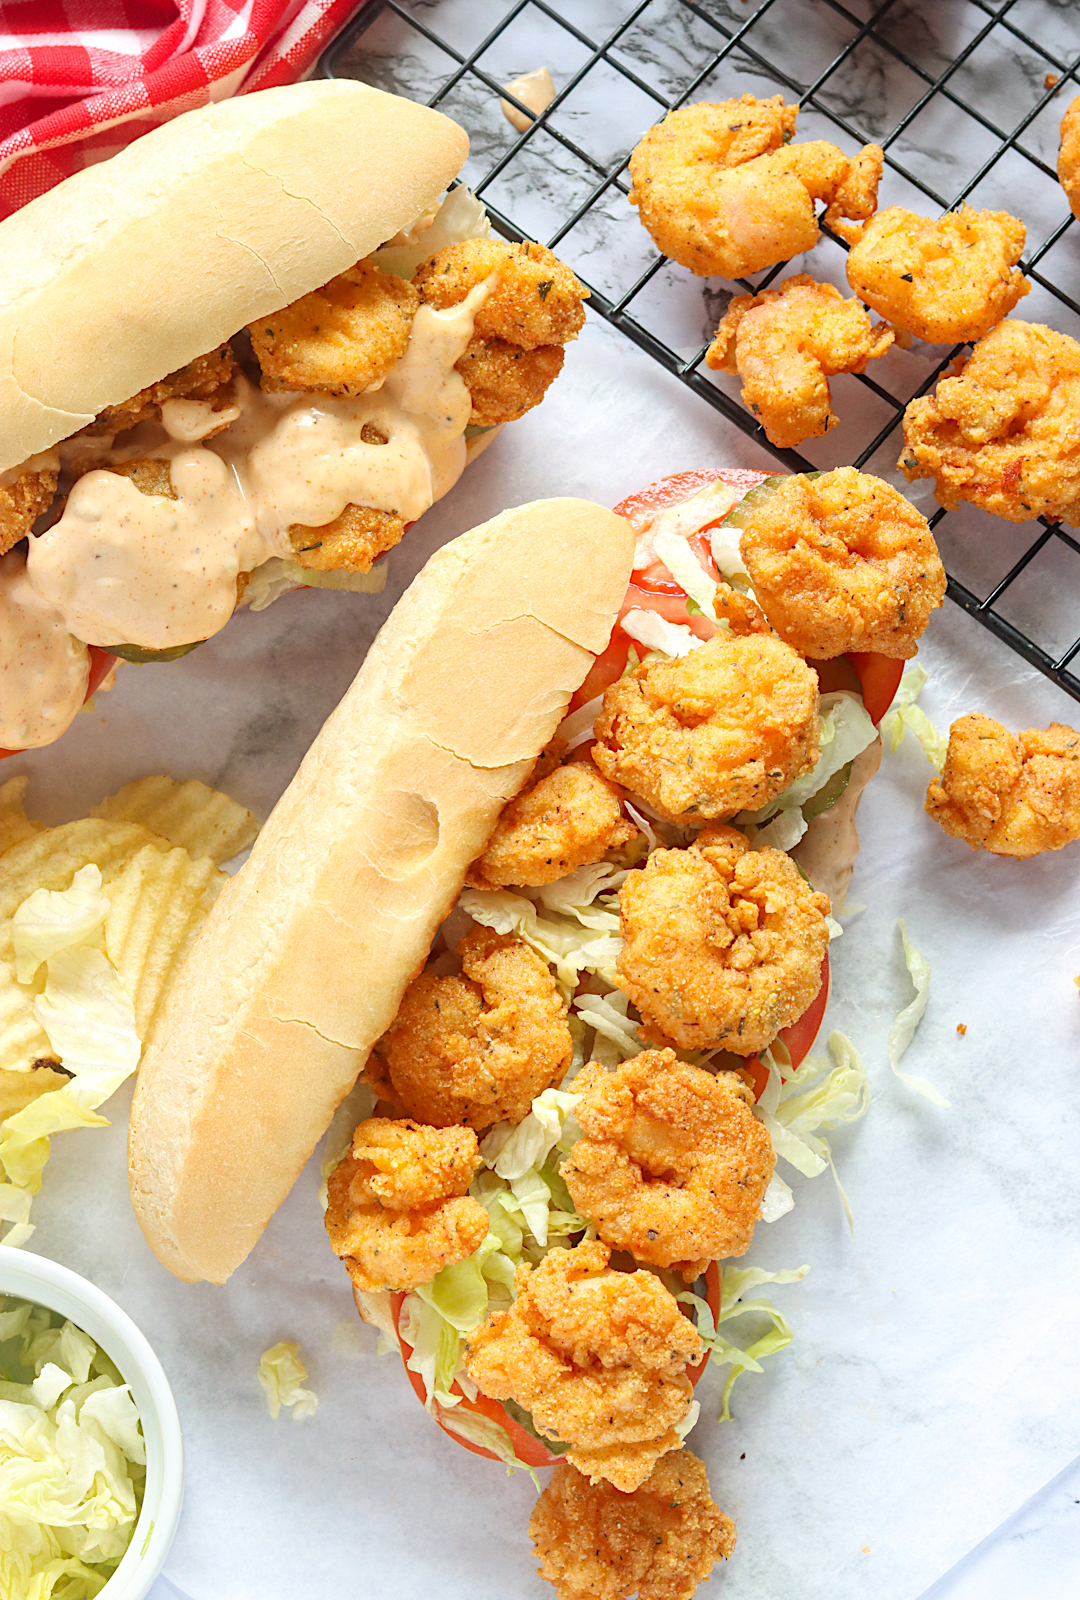 An insanely delicious shrimp po' boy sandwich ready to devour